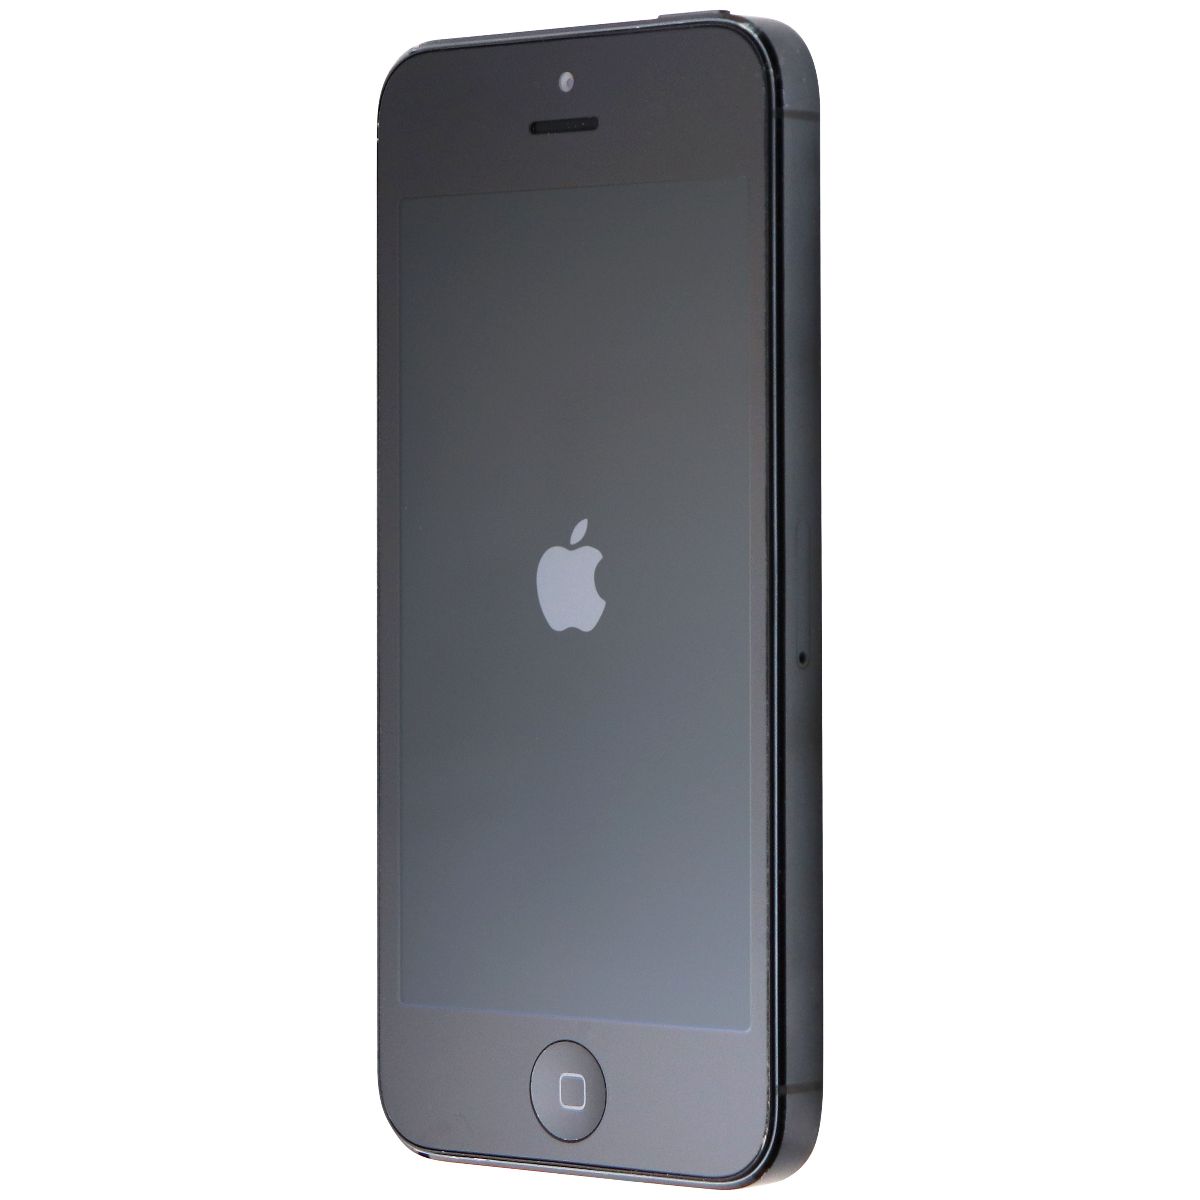 Apple iPhone 5 (4-inch) Smartphone (A1429) UNLOCKED - 16GB / Black Slate Cell Phones & Smartphones Apple    - Simple Cell Bulk Wholesale Pricing - USA Seller